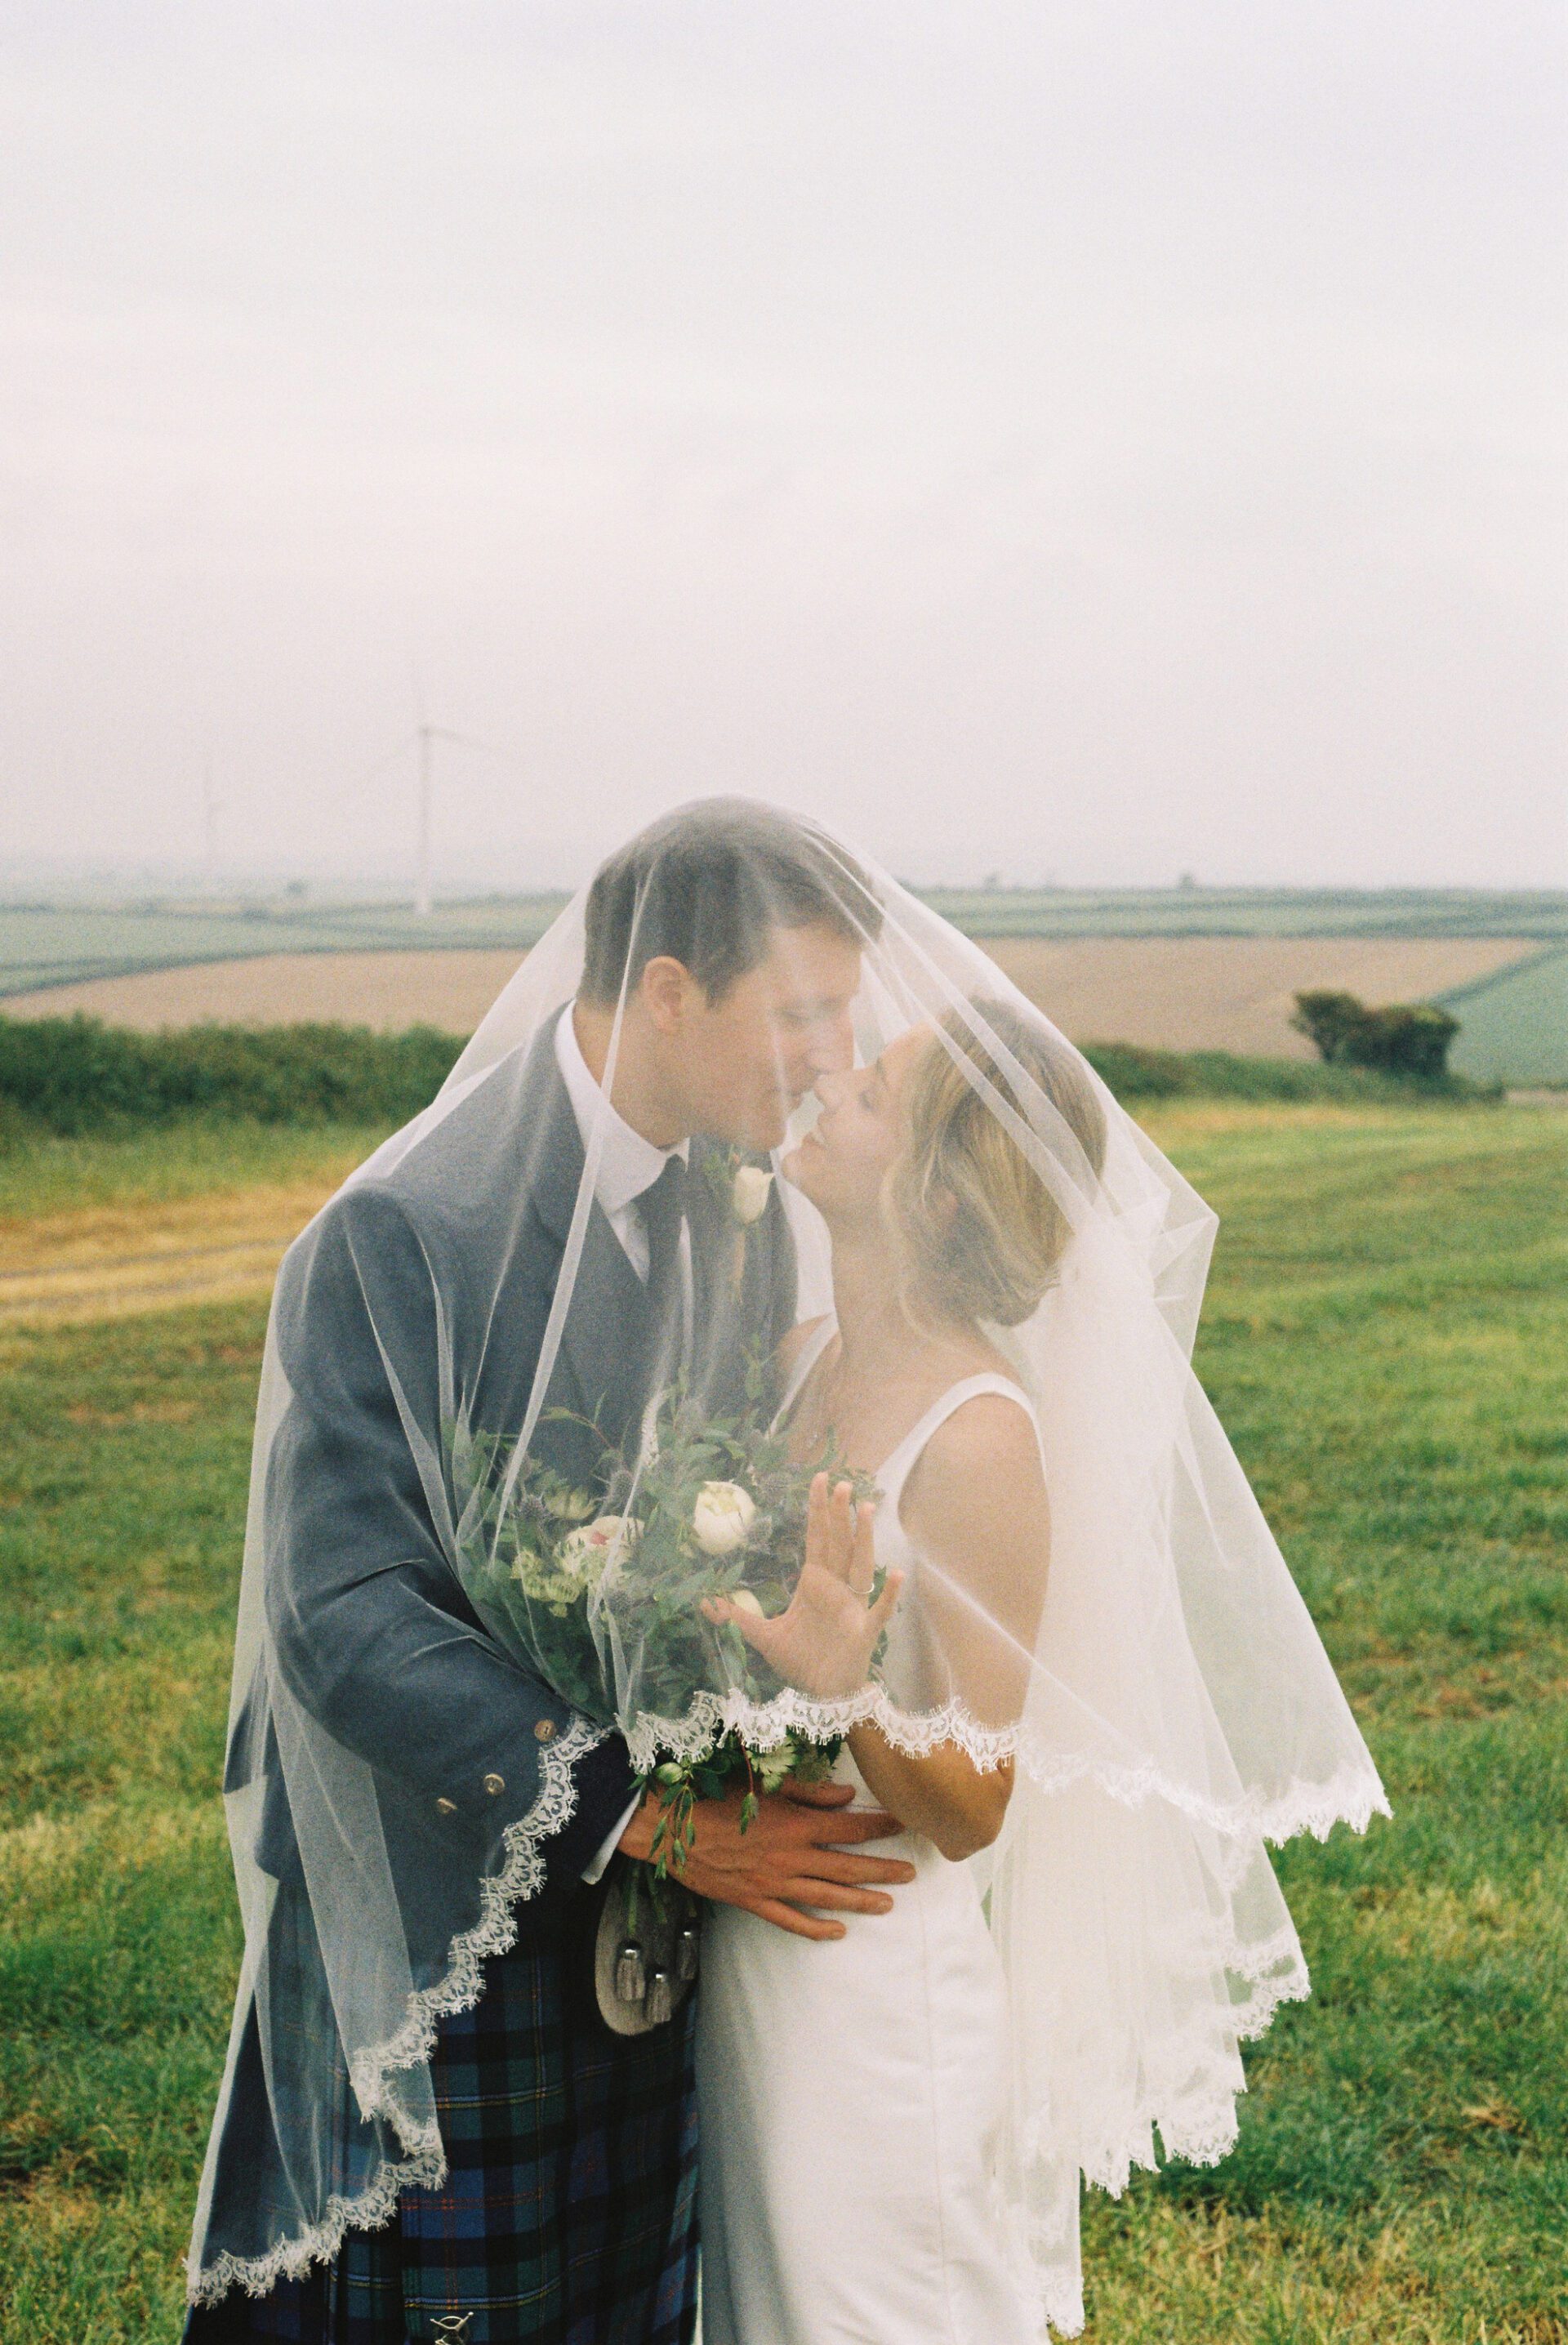 Timeless wedding photography captured on 35mm in Devon